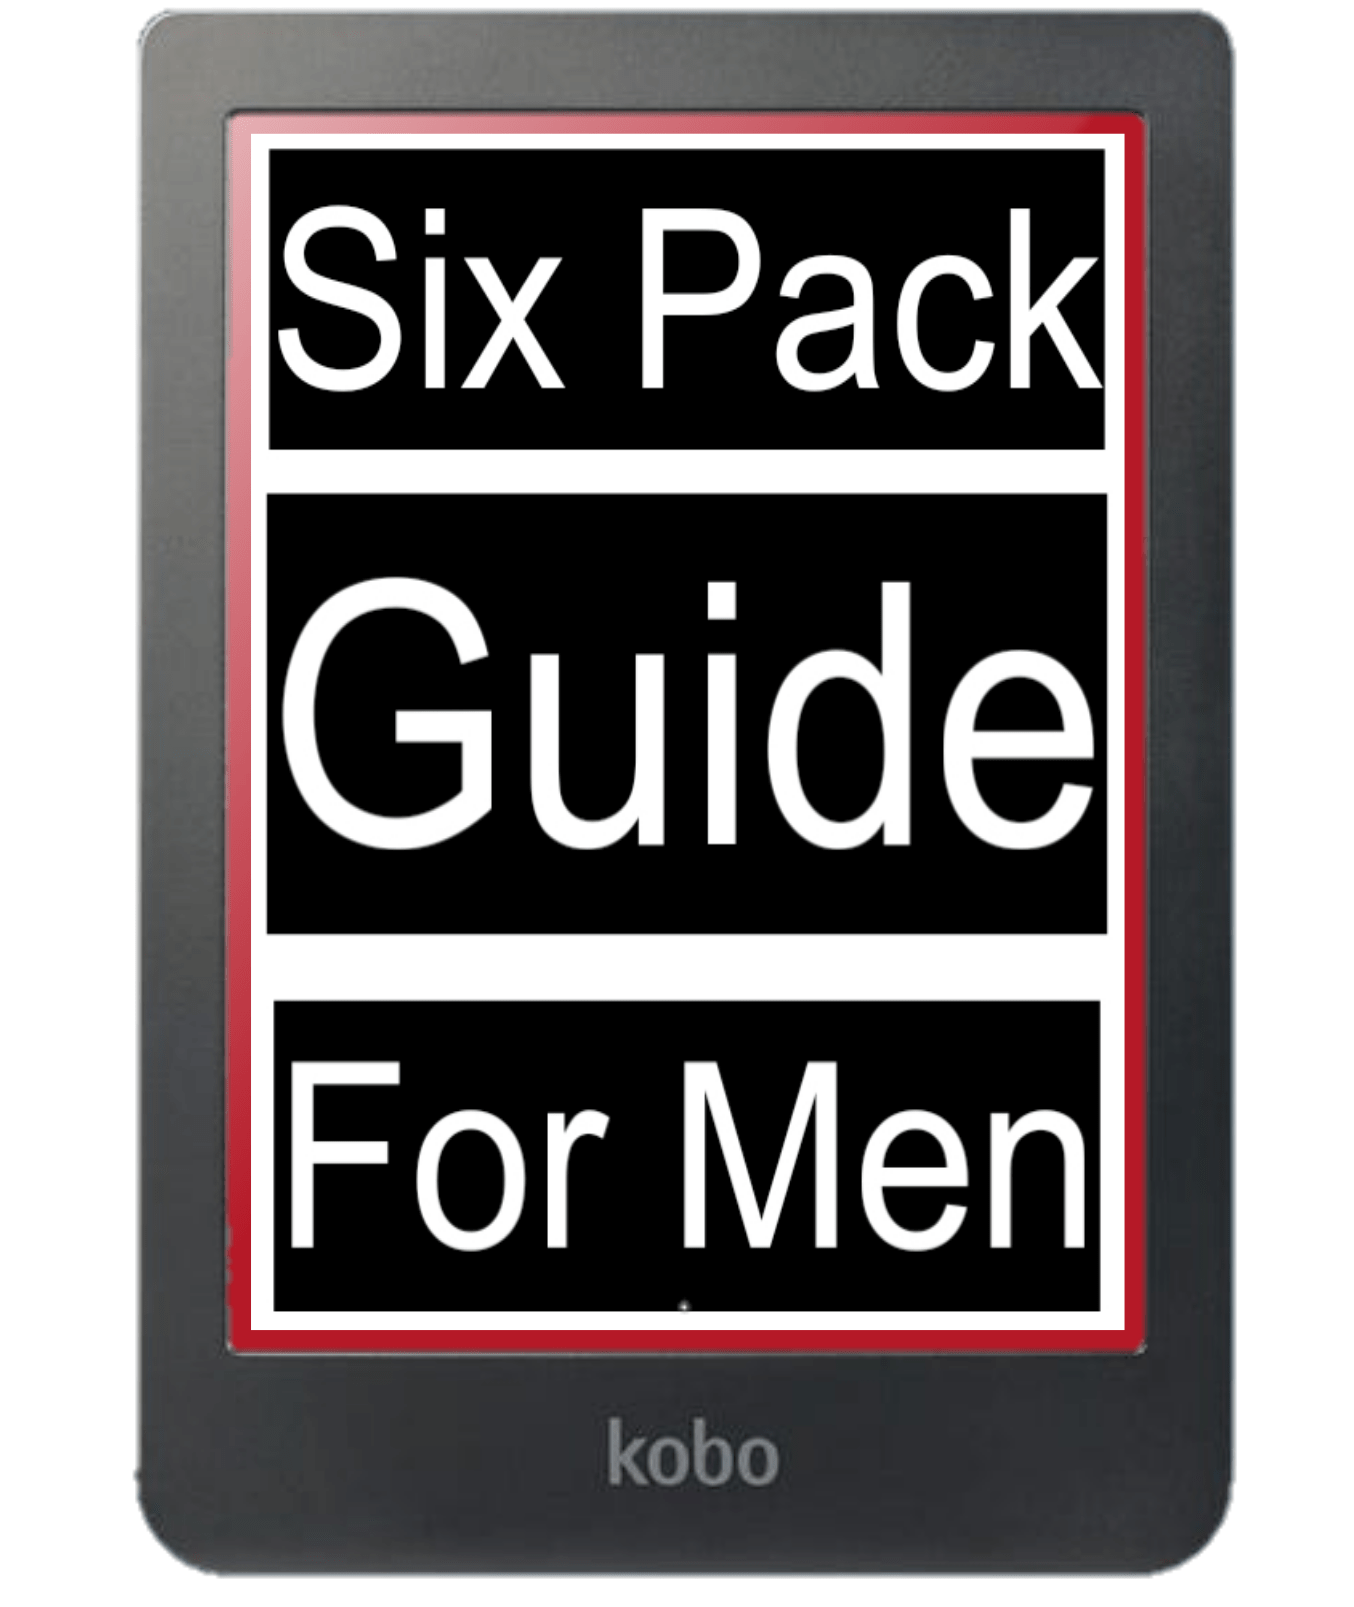 Six Pack Guide For Men